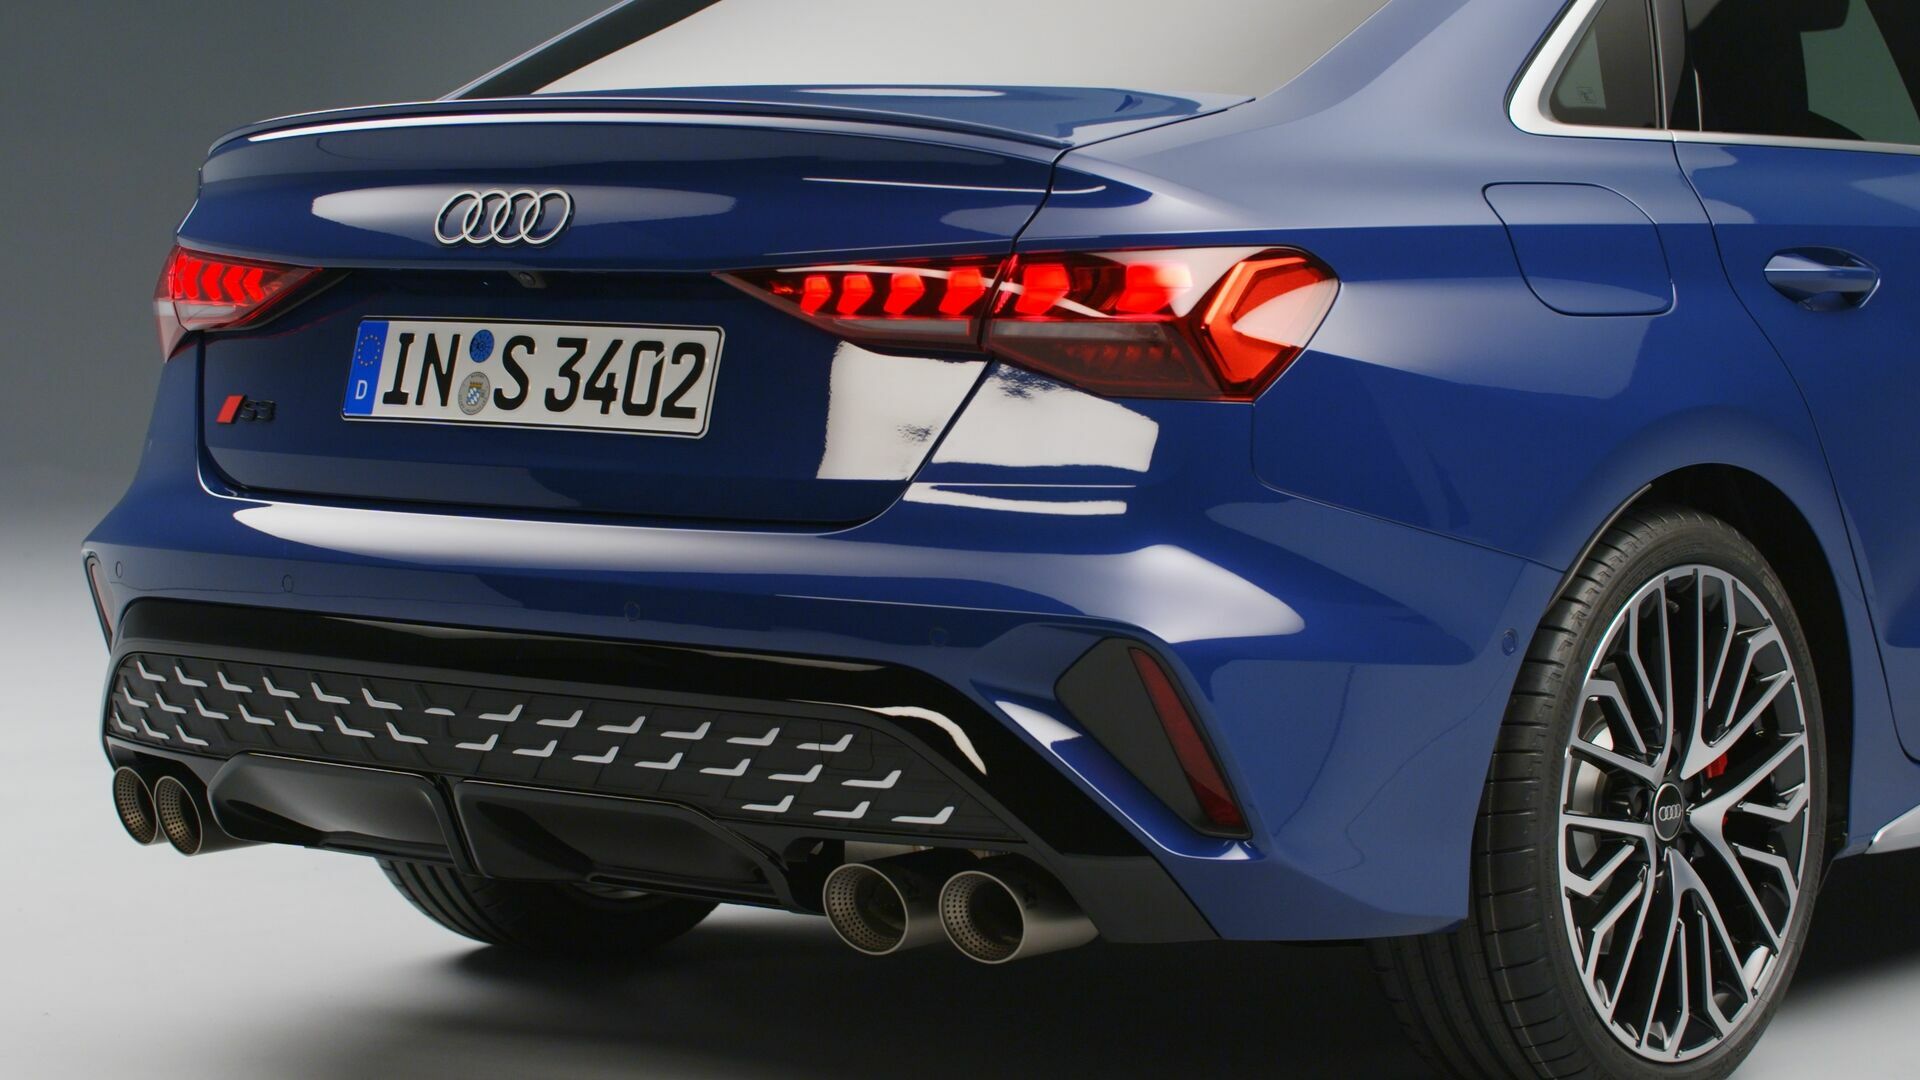 Das Design des Audi S3 und Audi A3 Sportback